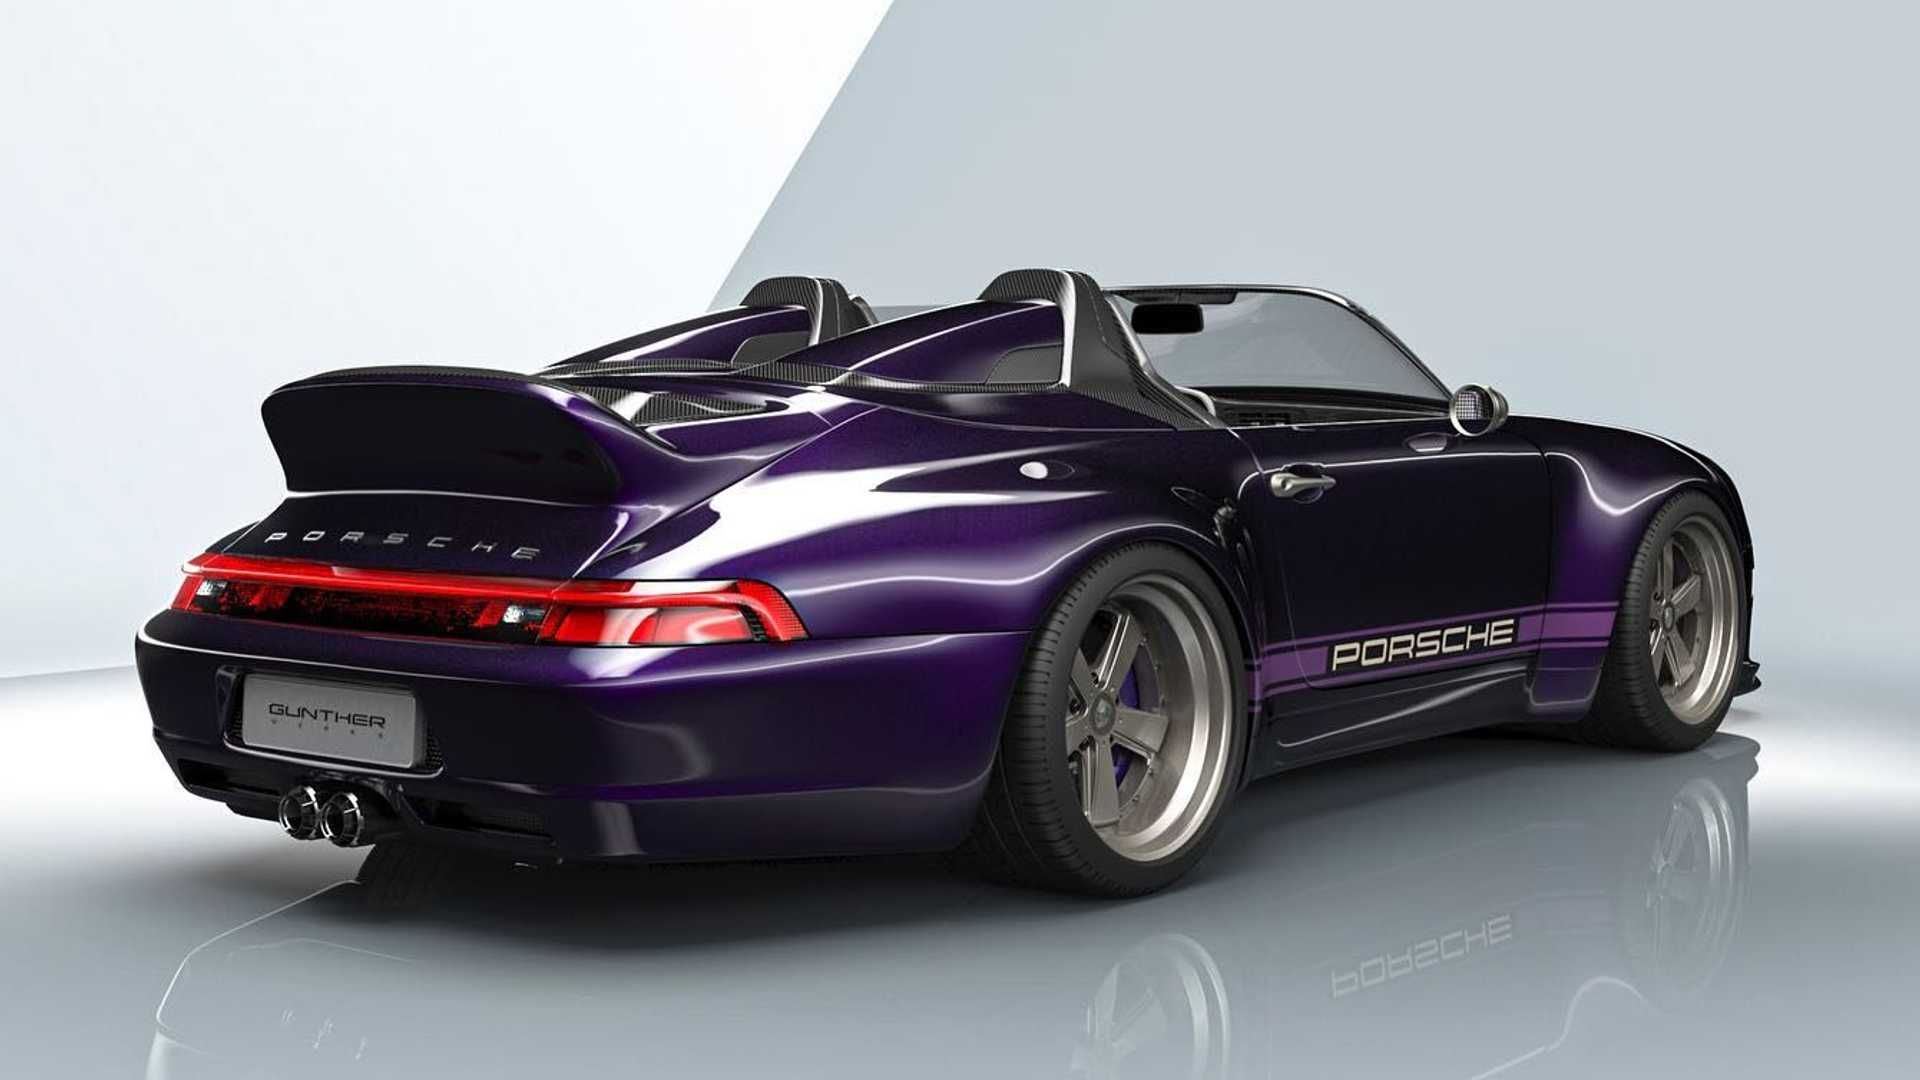 gunther-werks-purple-porsche-993-speedster-commission-low-angle-rear